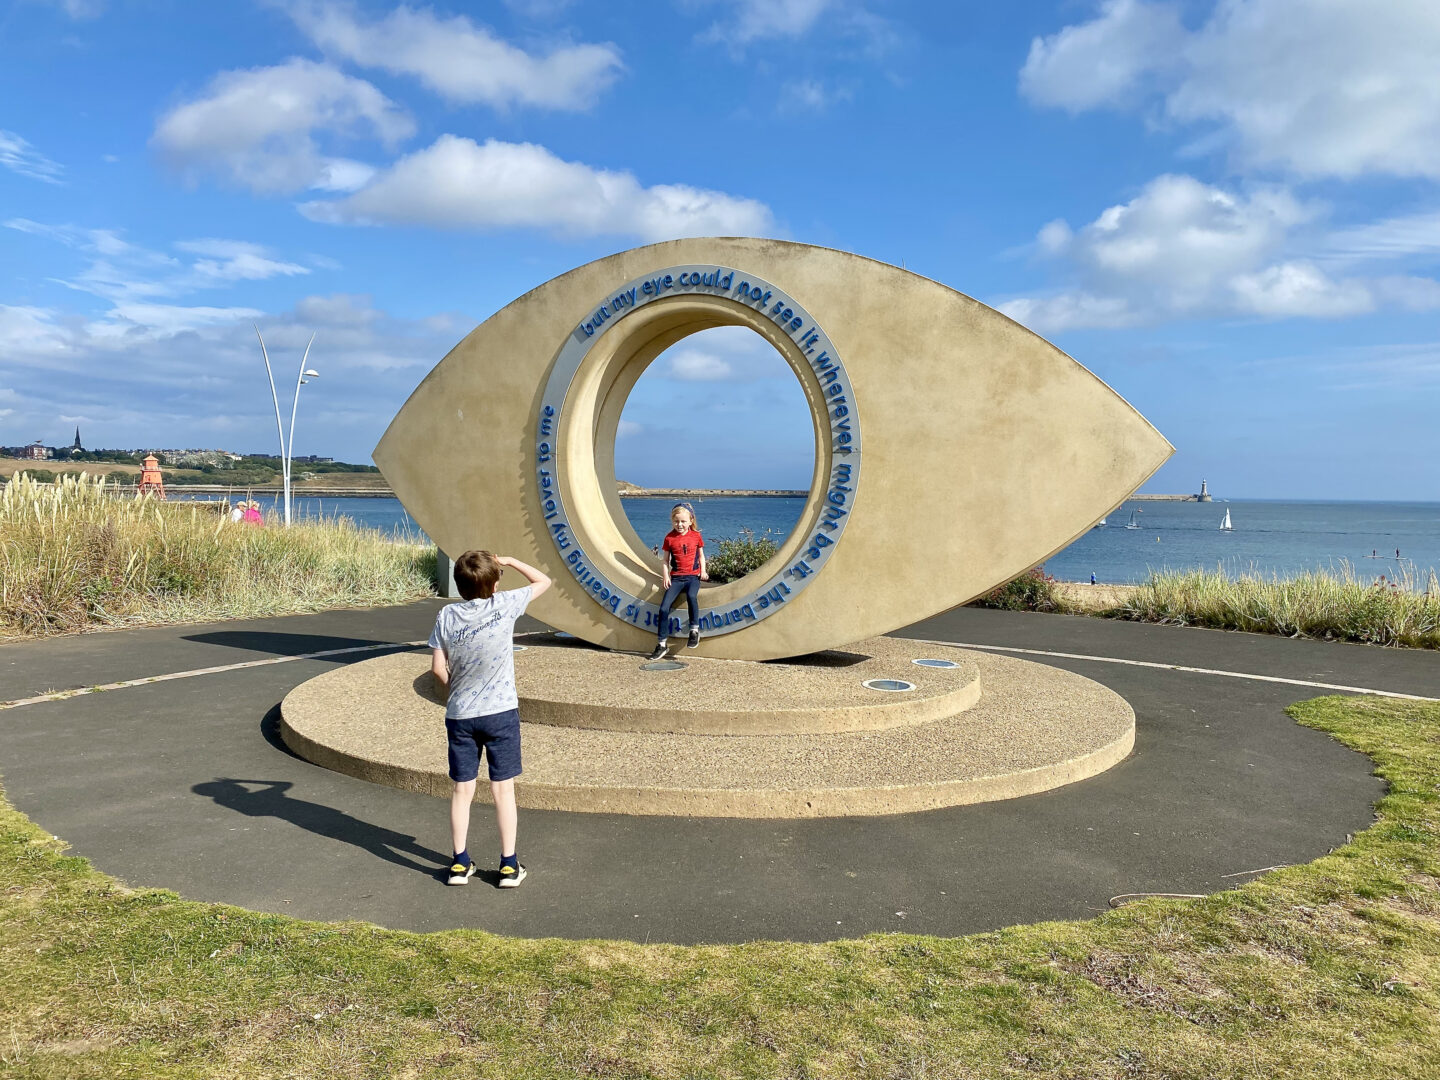 A public art sculpture that looks like a large stone eye